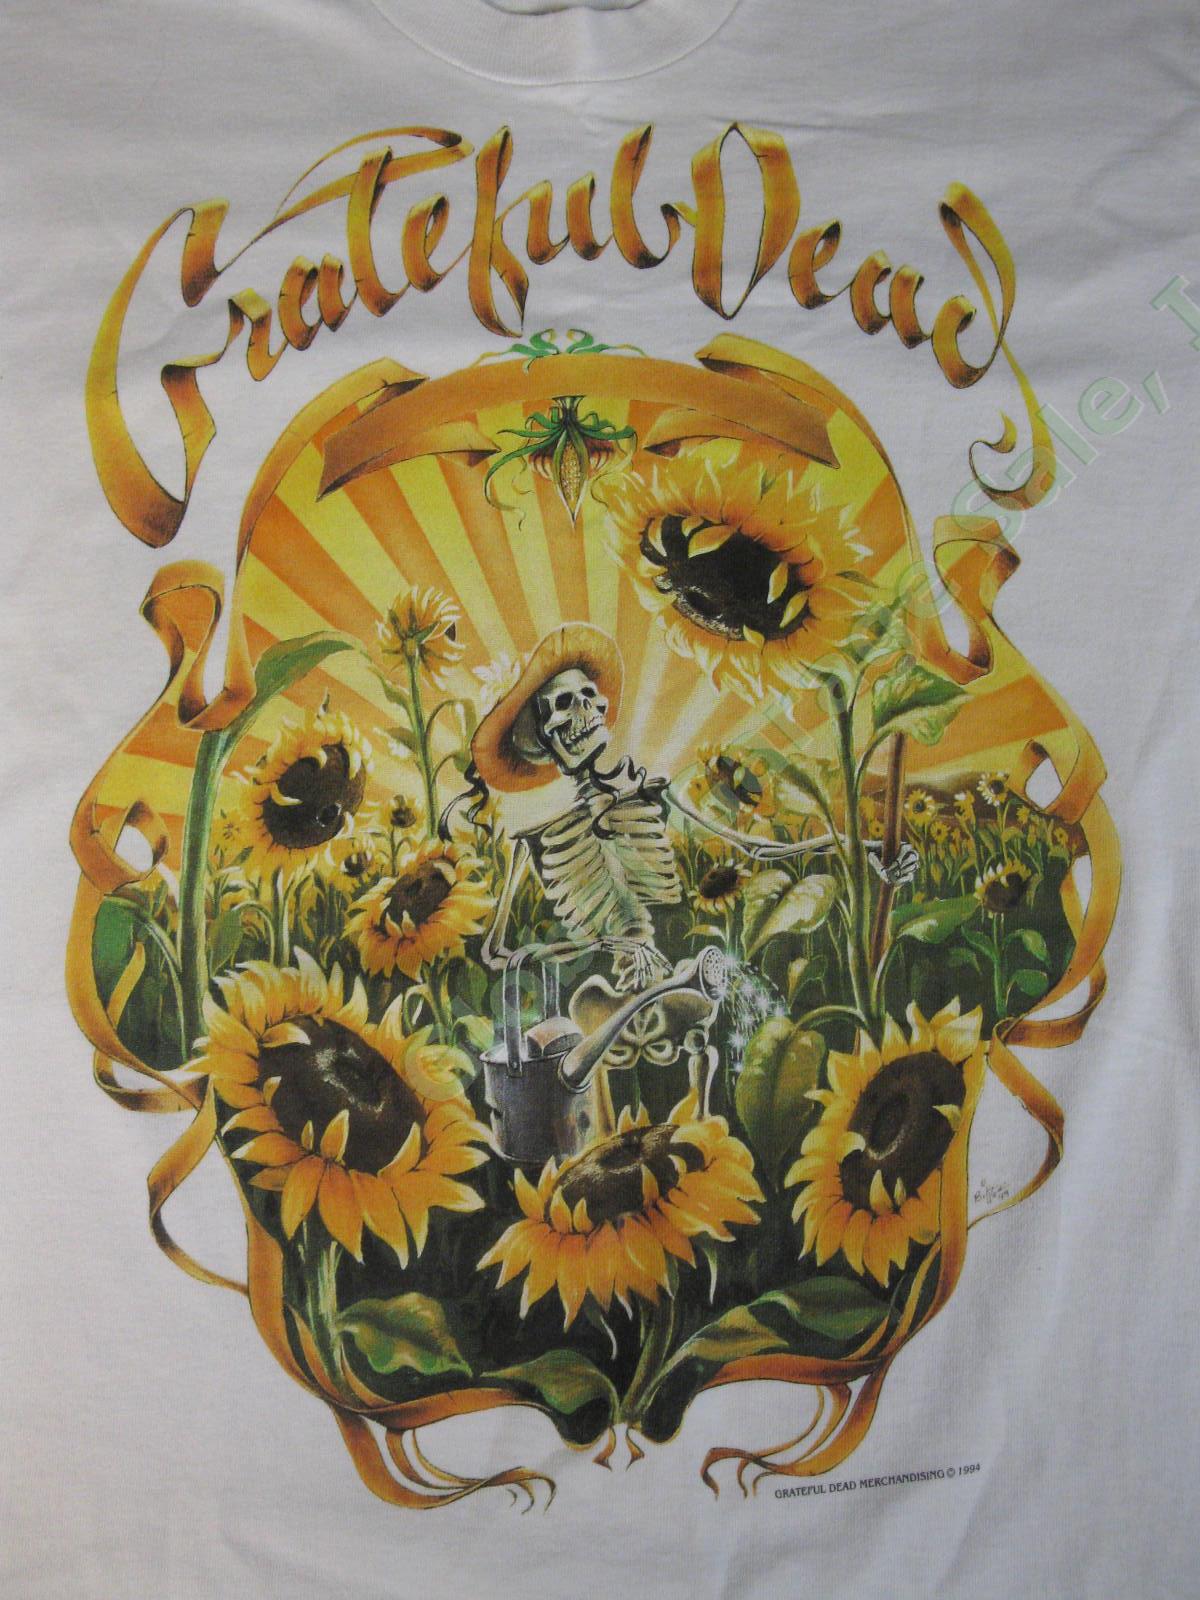 ORIGINAL Vintage 1994 Grateful Dead Sunflower Grower Summer Tour Large T-Shirt 1